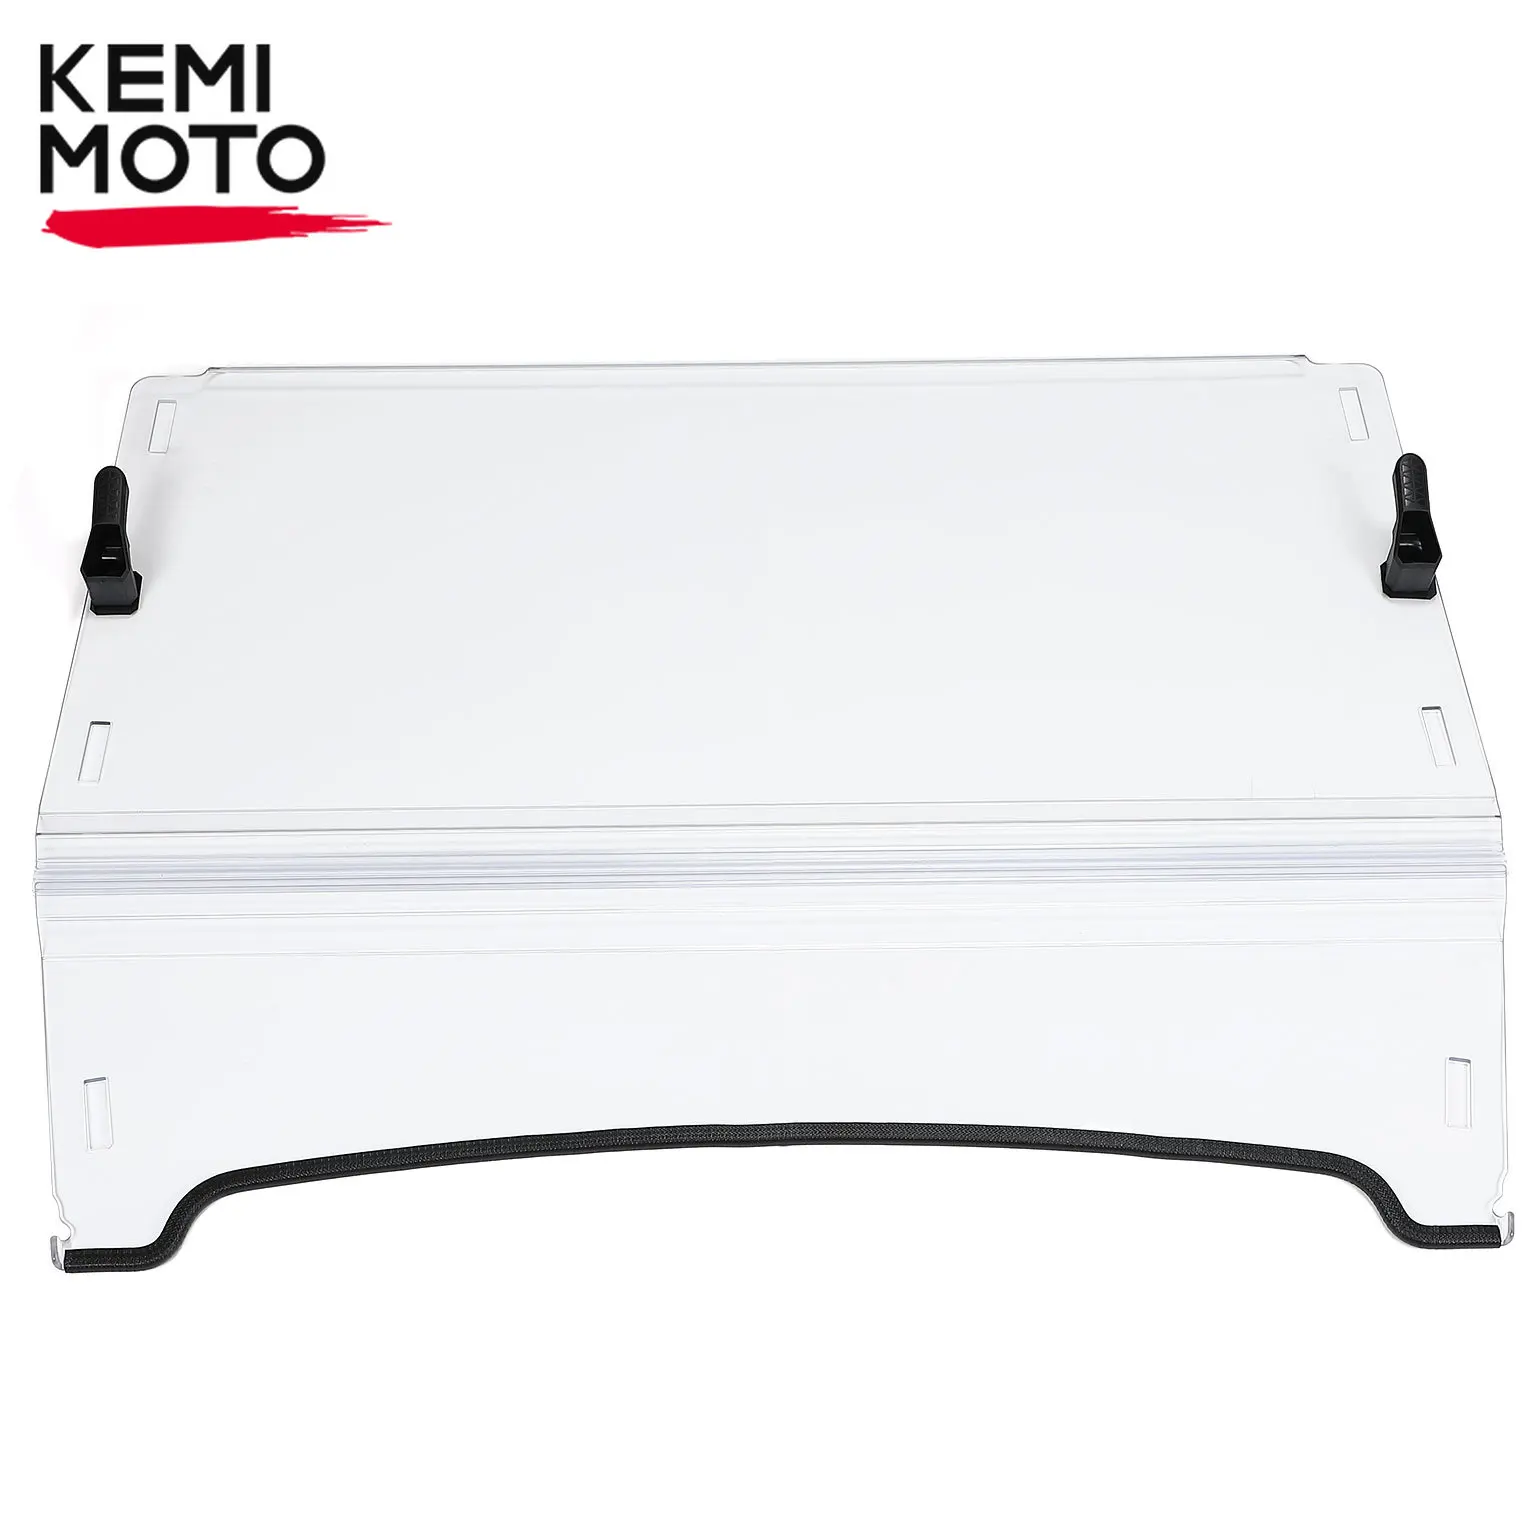 

KEMIMOTO PC Clear Front Folding Windshield PC Windscreen Compatible with John Deere Gator 620i 625i 825i XUV 850 855D HPX 4x4